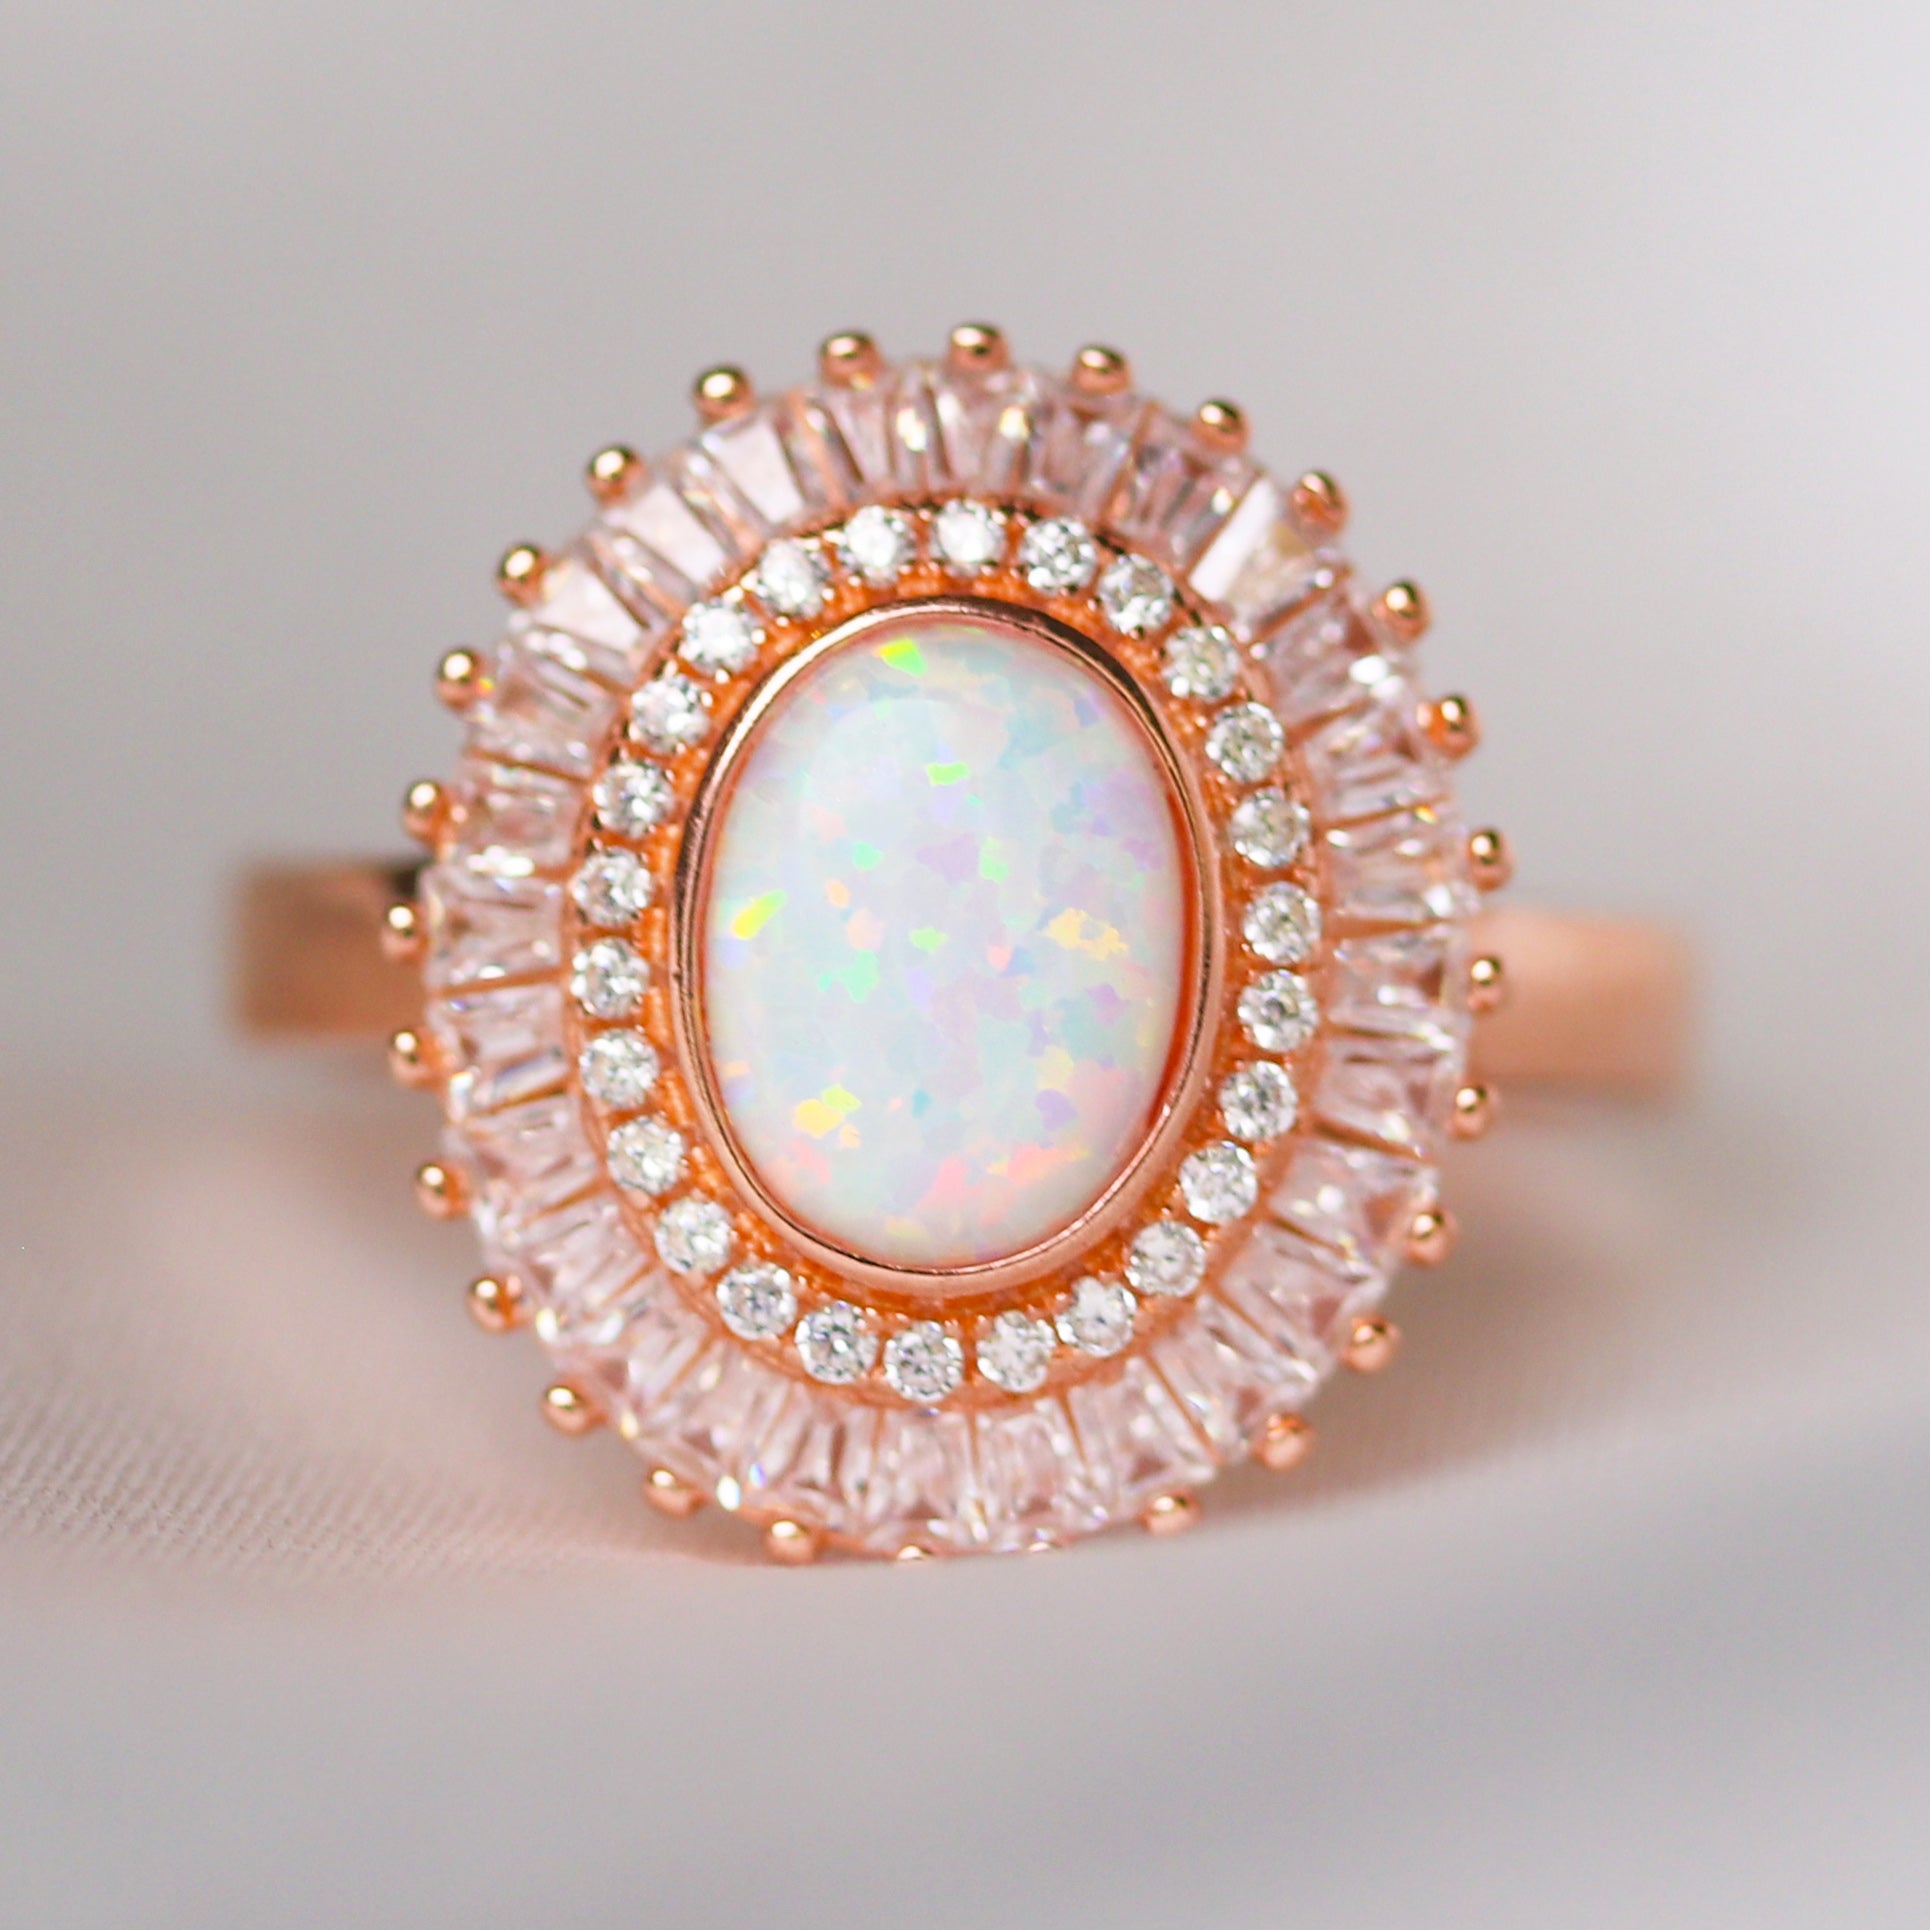 Art Deco Opal Baguette Ring 14k Rose Gold plated 925 sterling silver cubic zirconia swarovski crystal